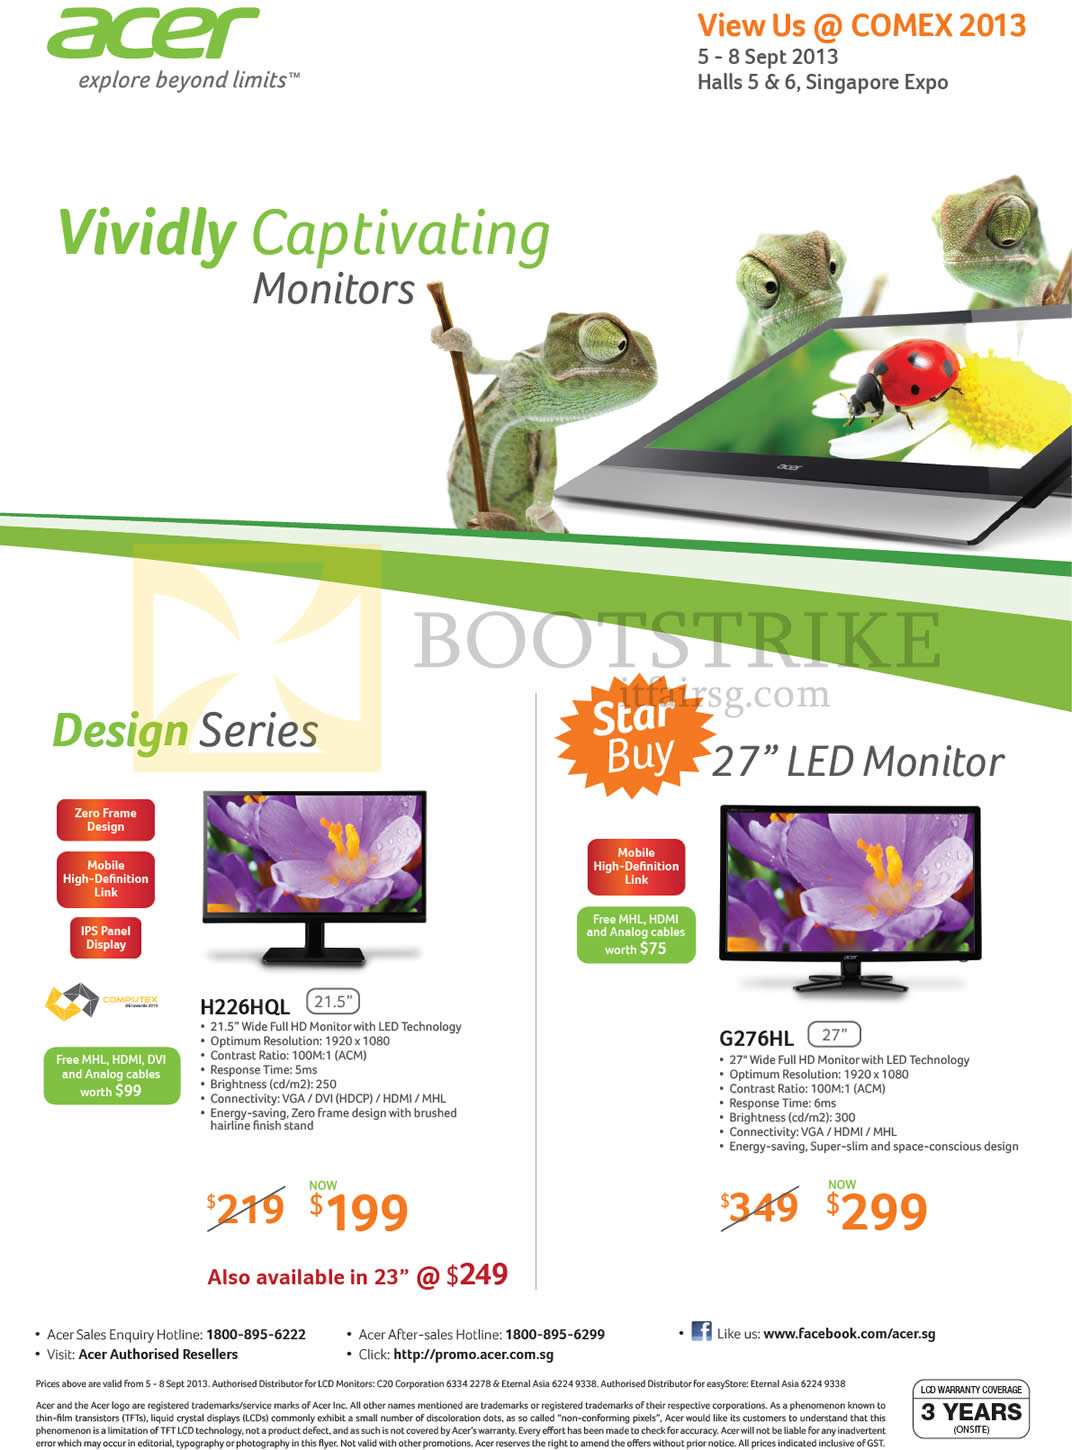 COMEX 2013 price list image brochure of Acer Monitors LED H226HQL, G276HL